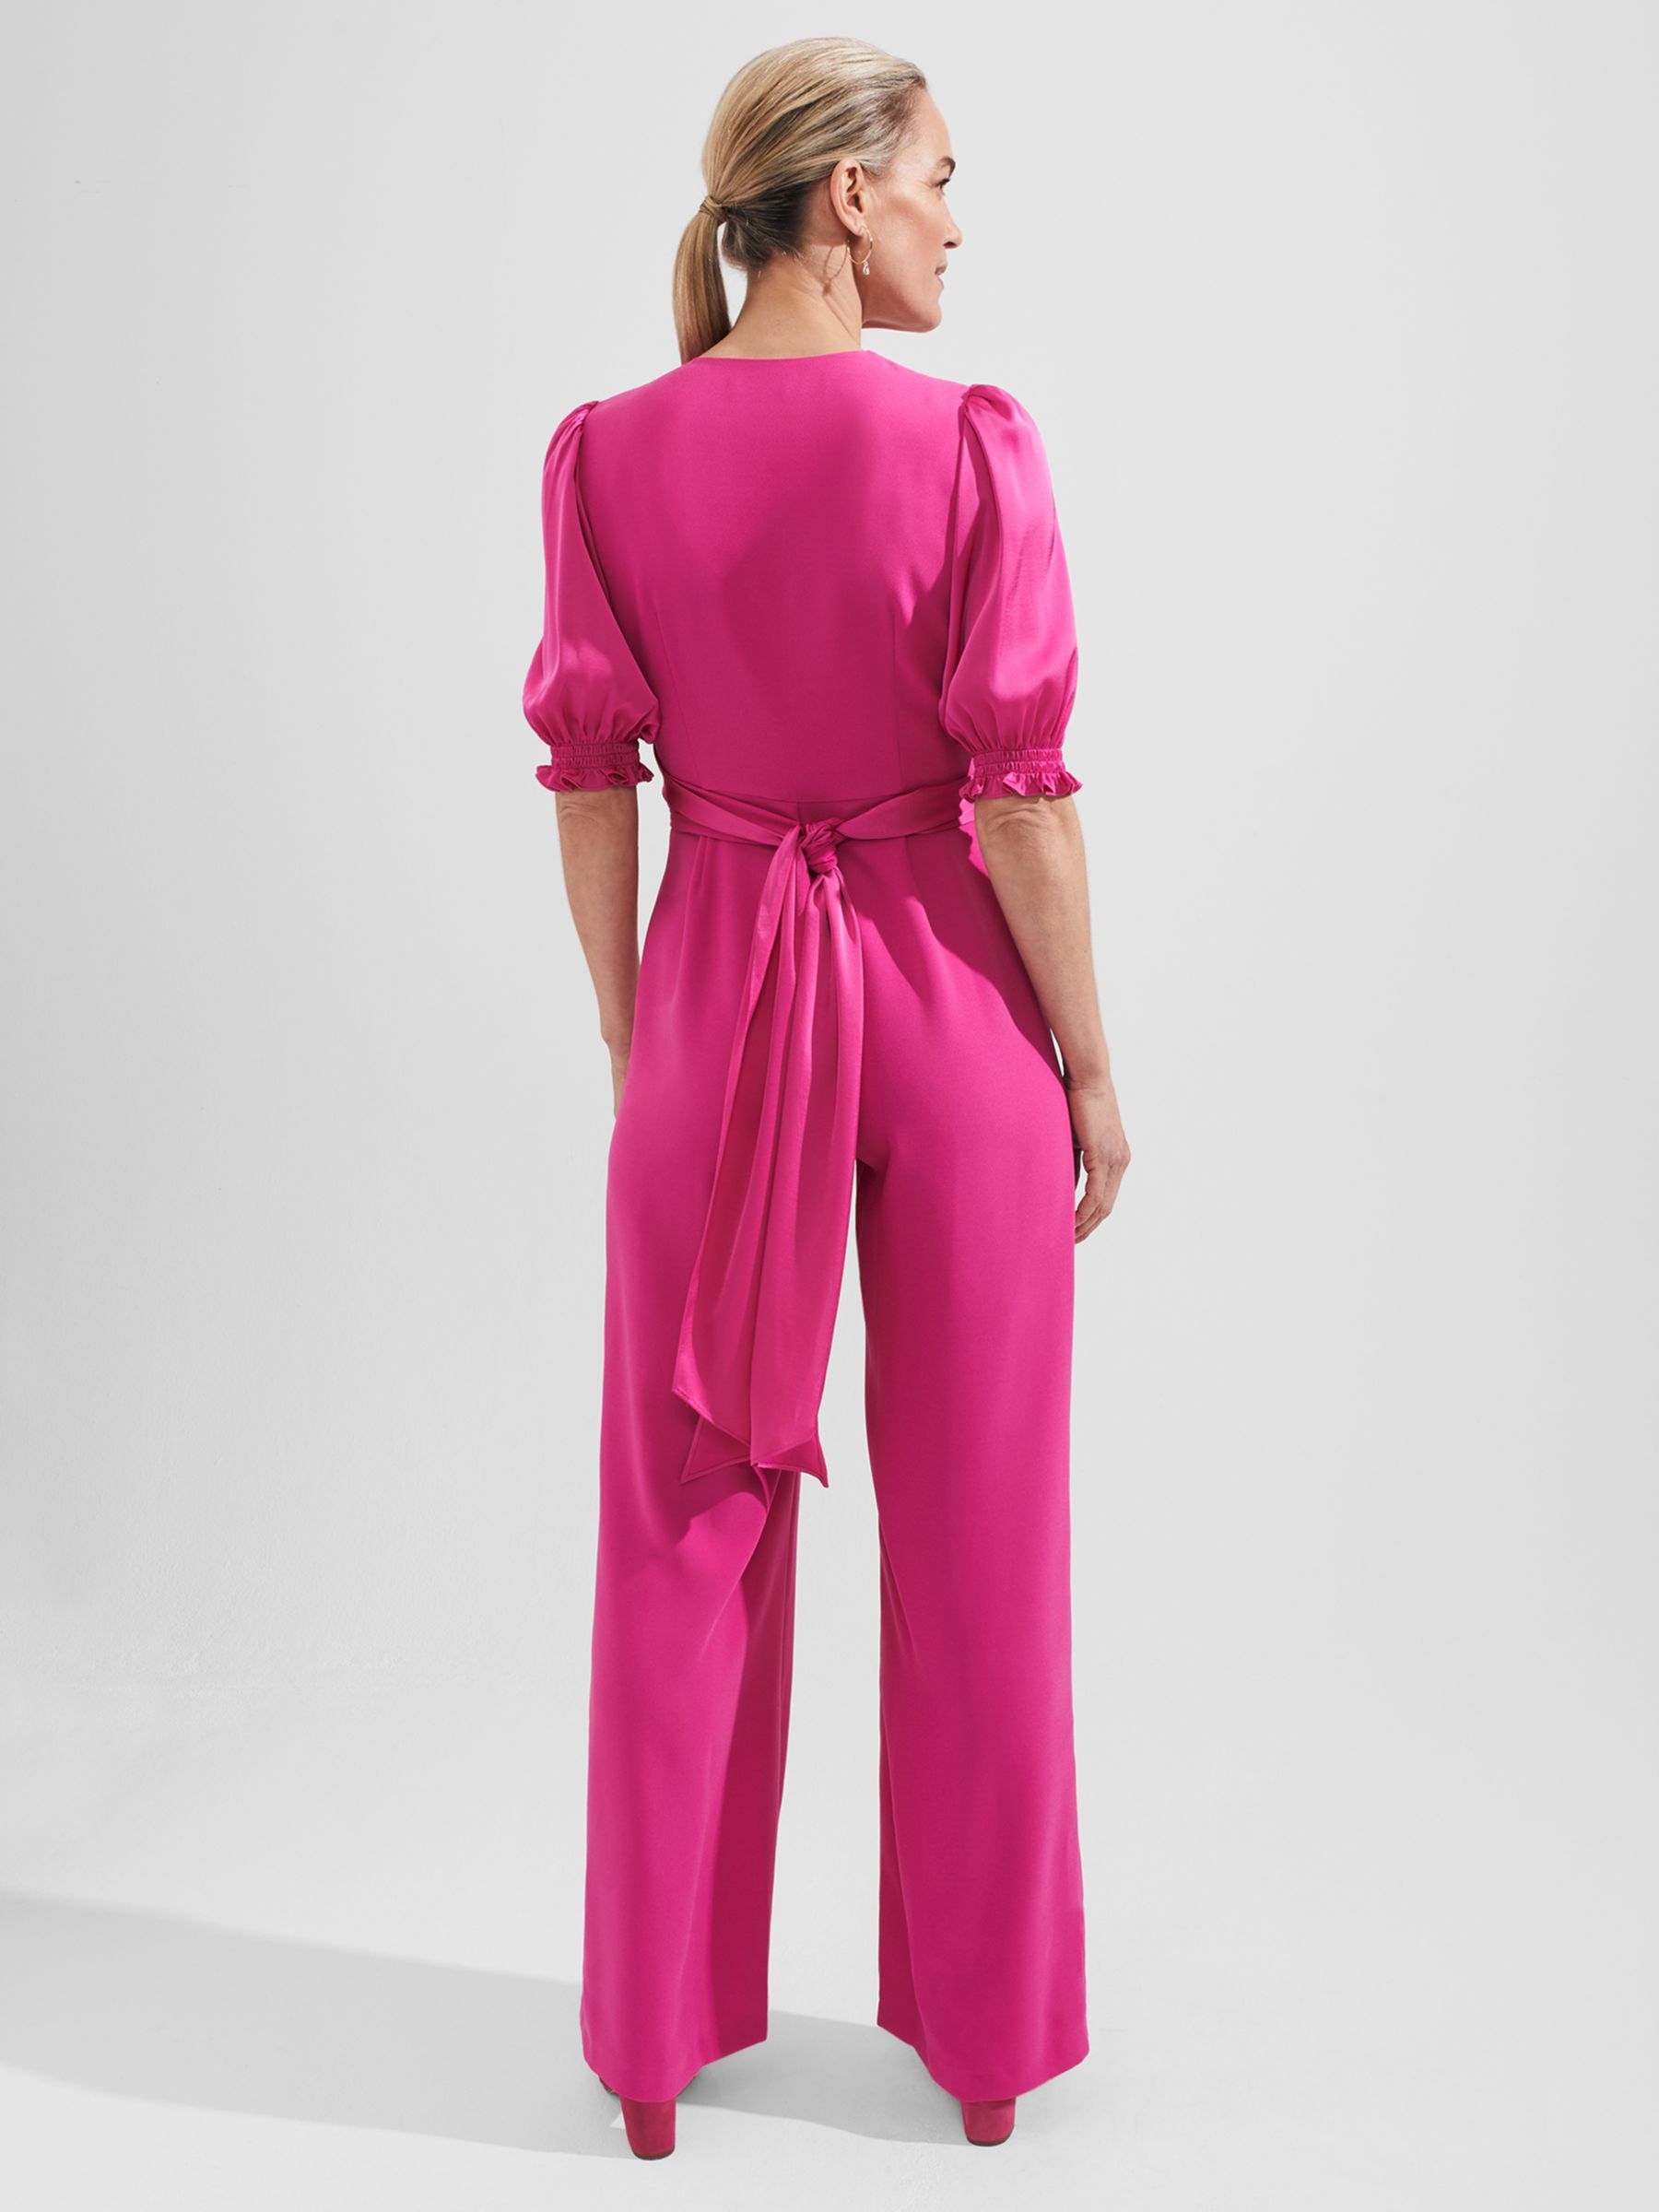 Hobbs Lenora Jumpsuit, Pink at John Lewis & Partners